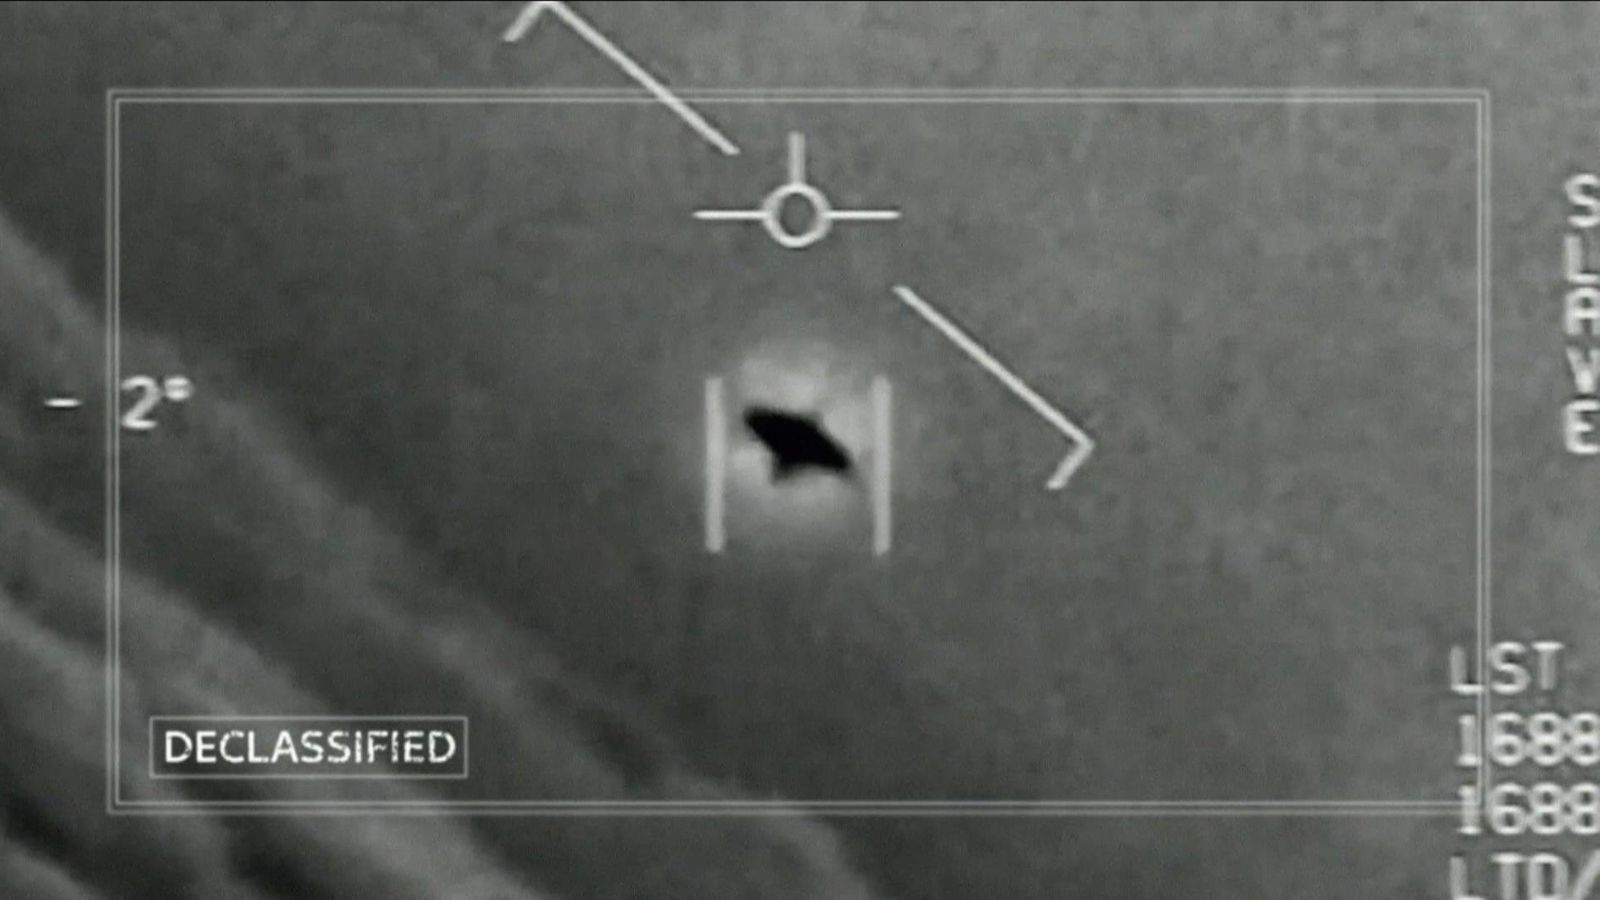 UK Has 'No Plans' for UFO Investigation after Pentagon Report